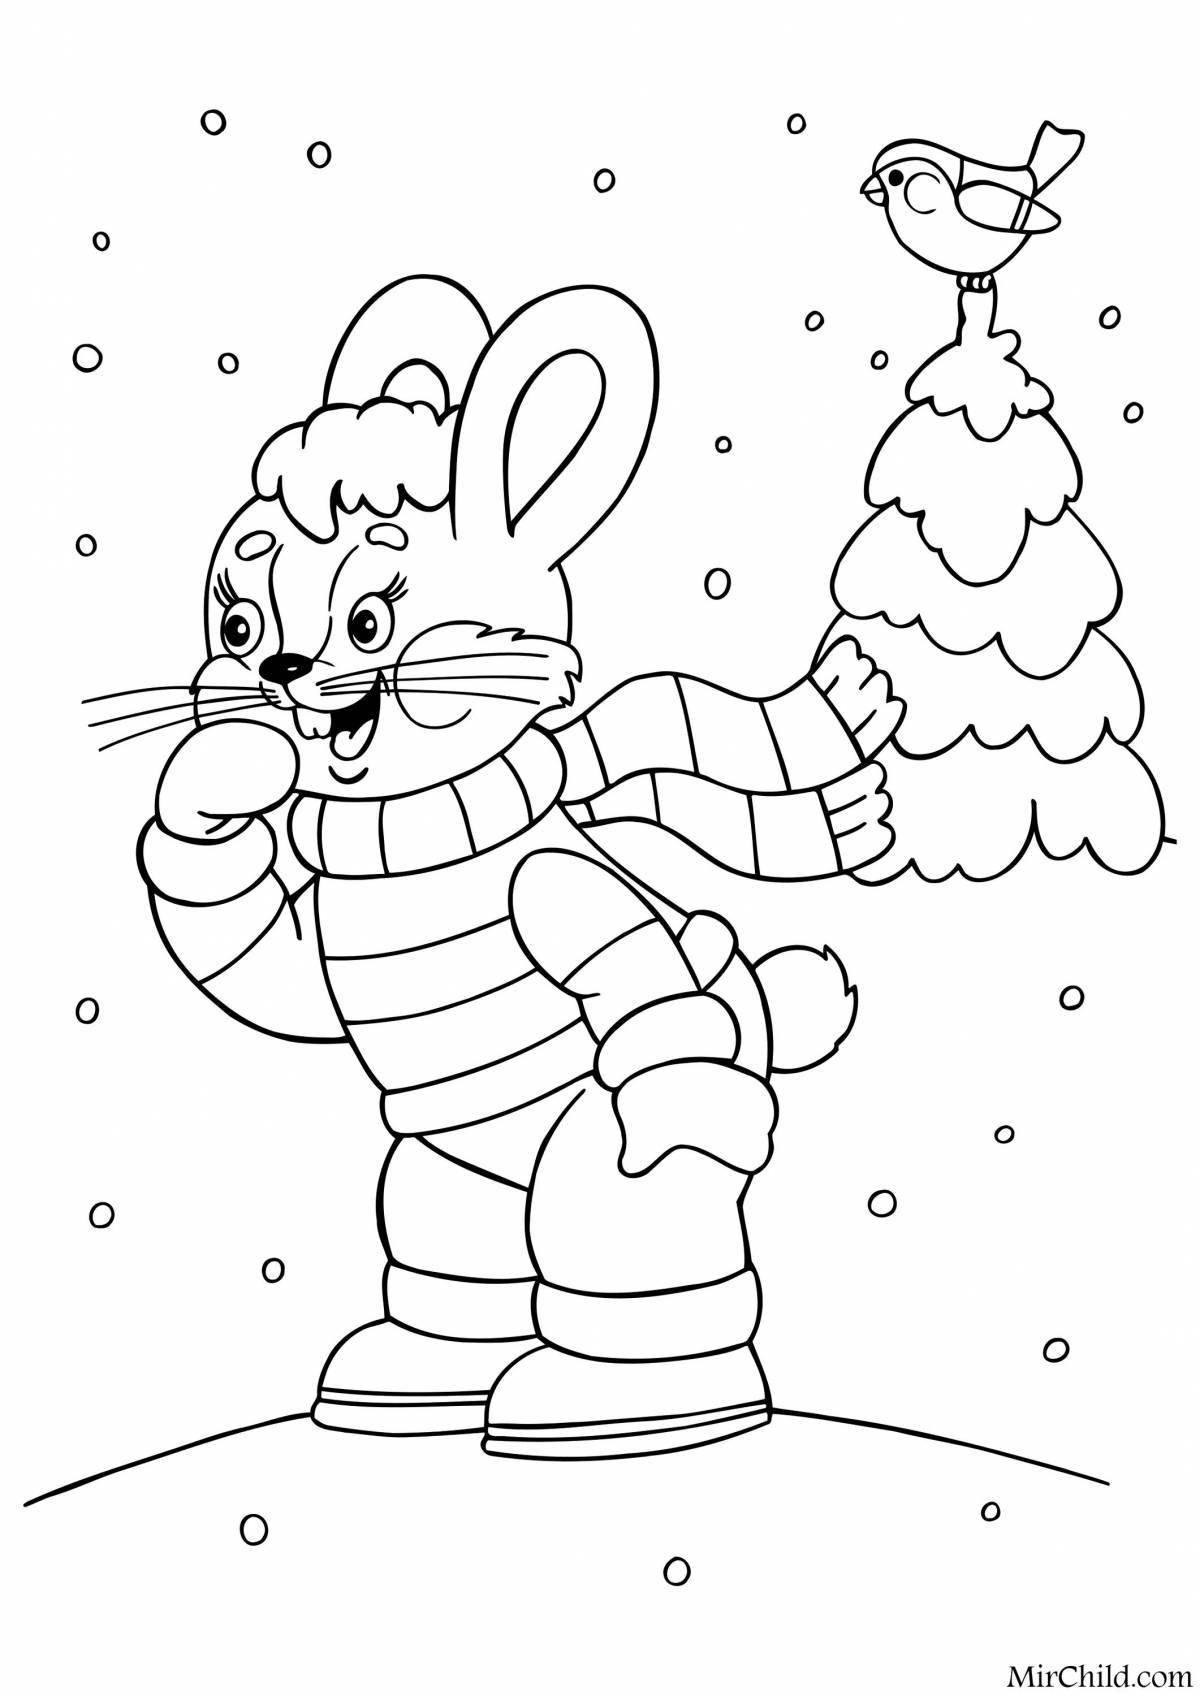 Exciting santa and bunny coloring book